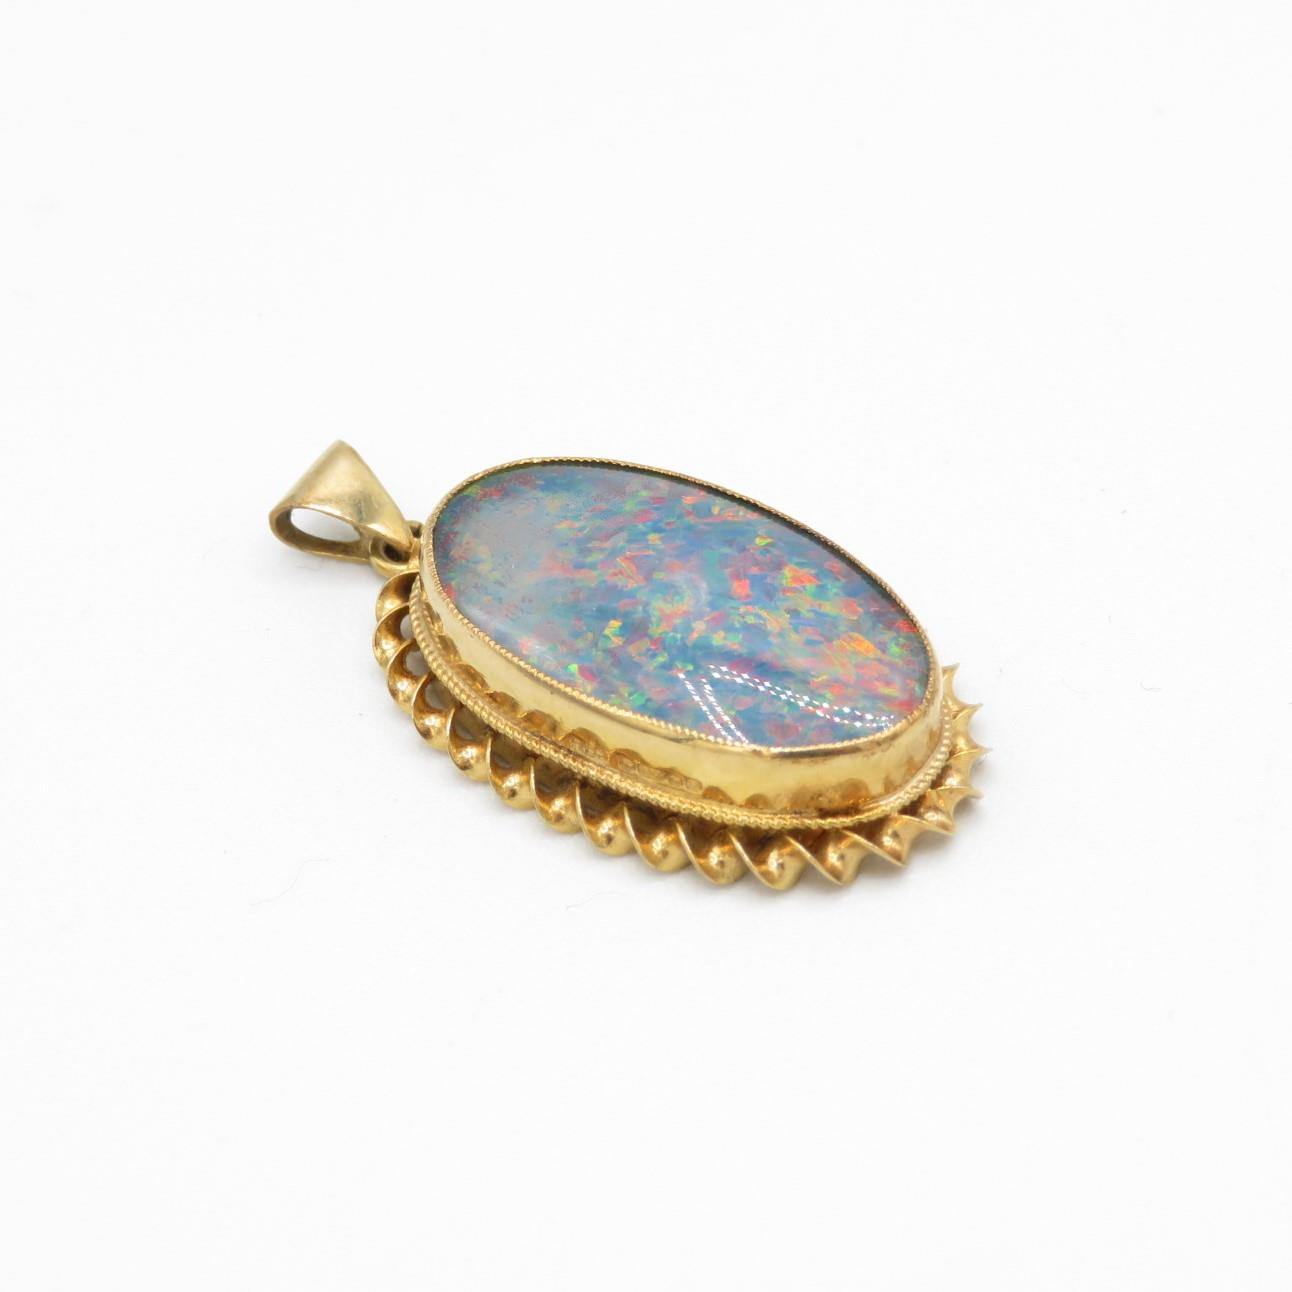 9ct gold oval opal triplet single stone pendant - 4.6 g